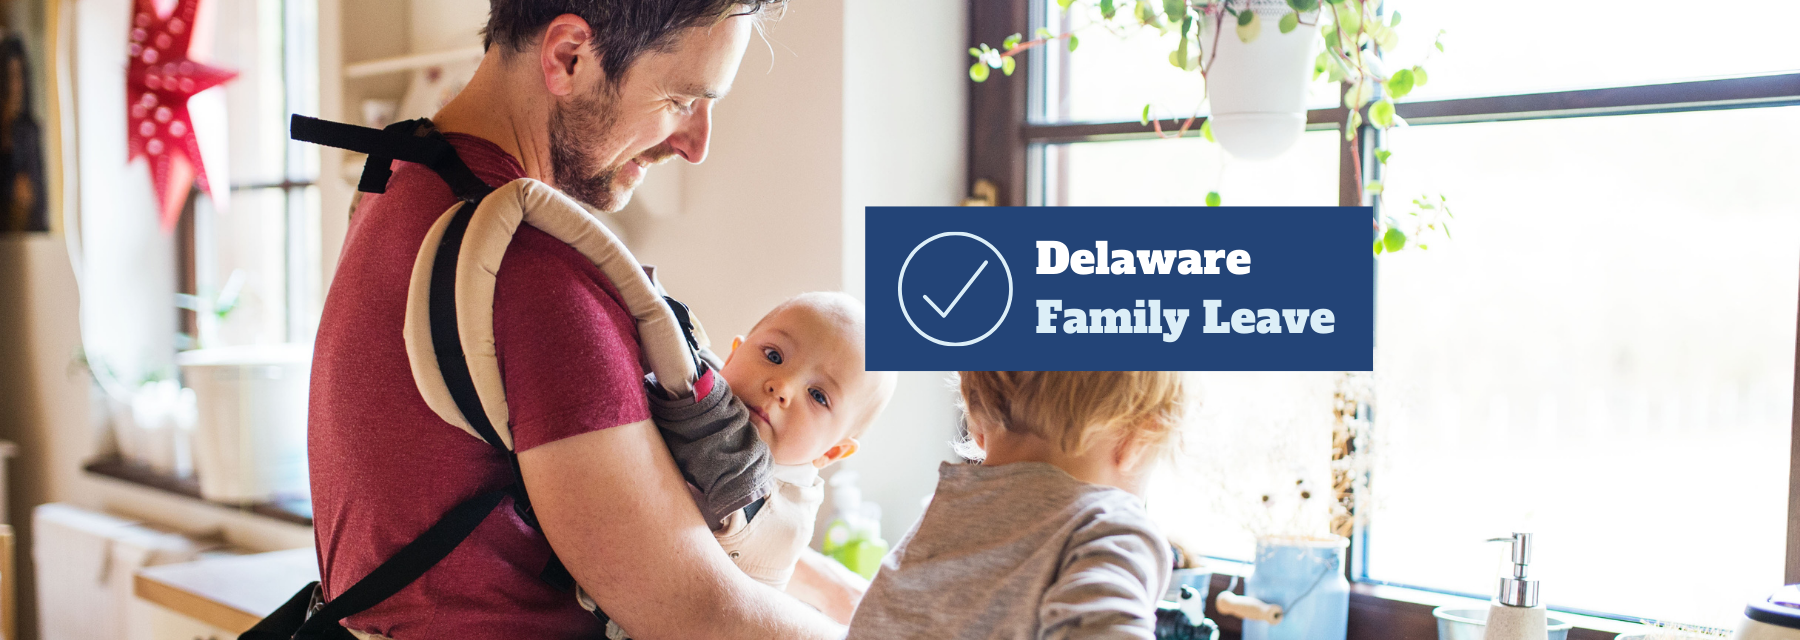 Delaware Family Leave